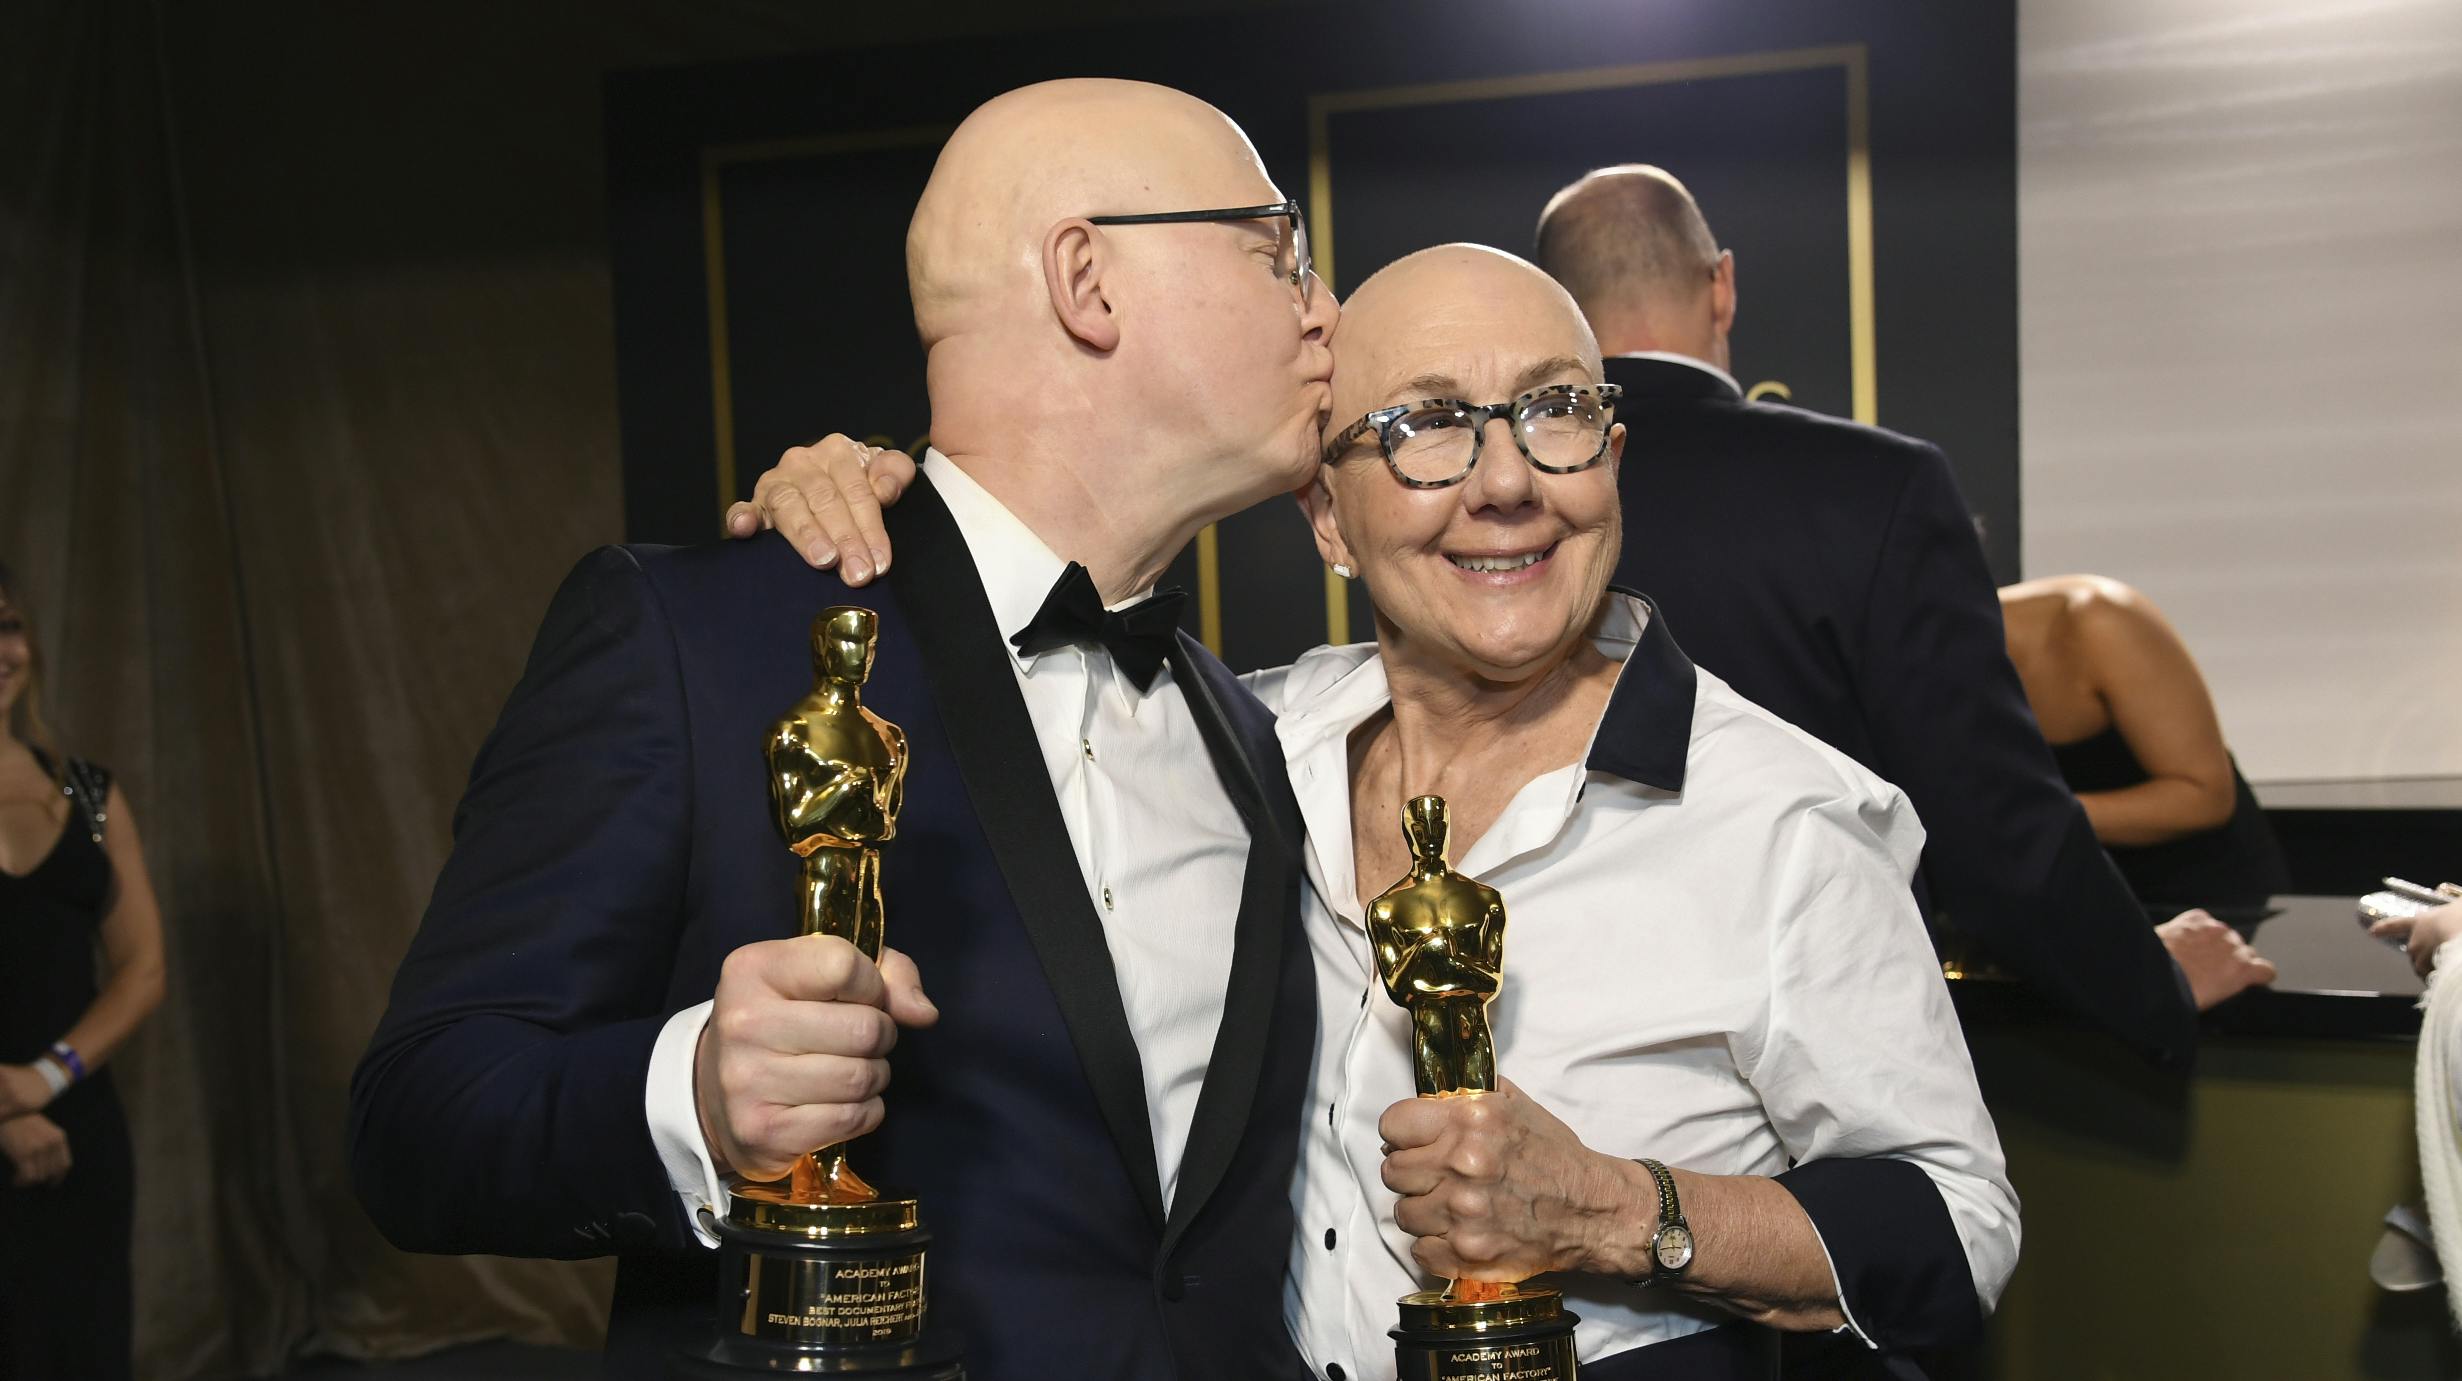 Julia Reichert modtog i 2020 en Oscar for filmen "American Factory".&nbsp;